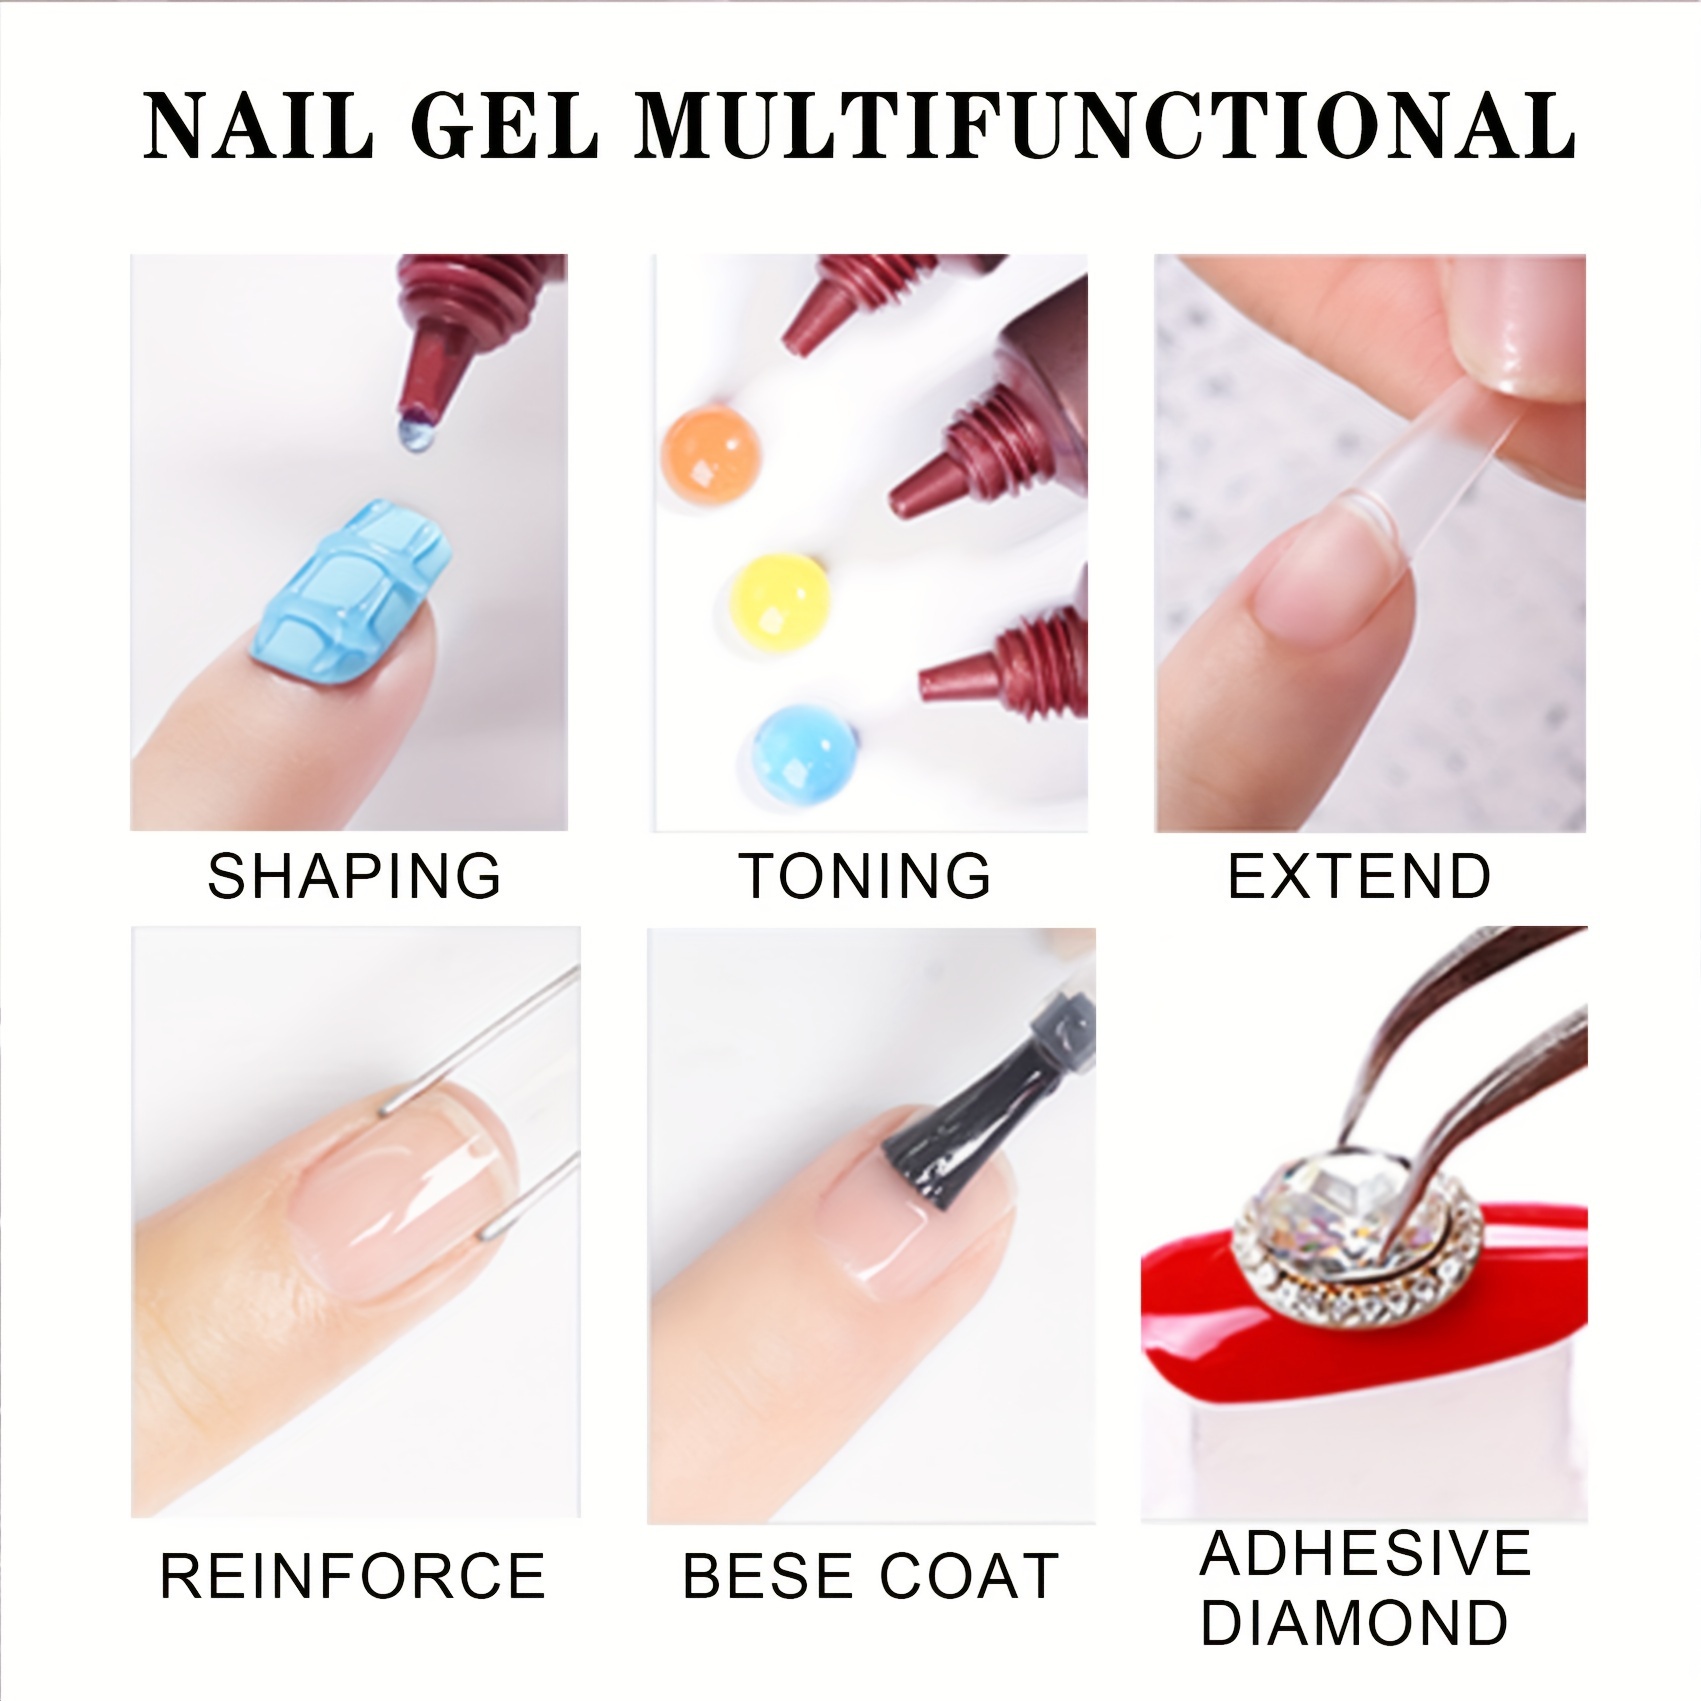 Nail Extension Near You in Winder | Polygel, Acrylic, Gel Extensions in  Winder, GA